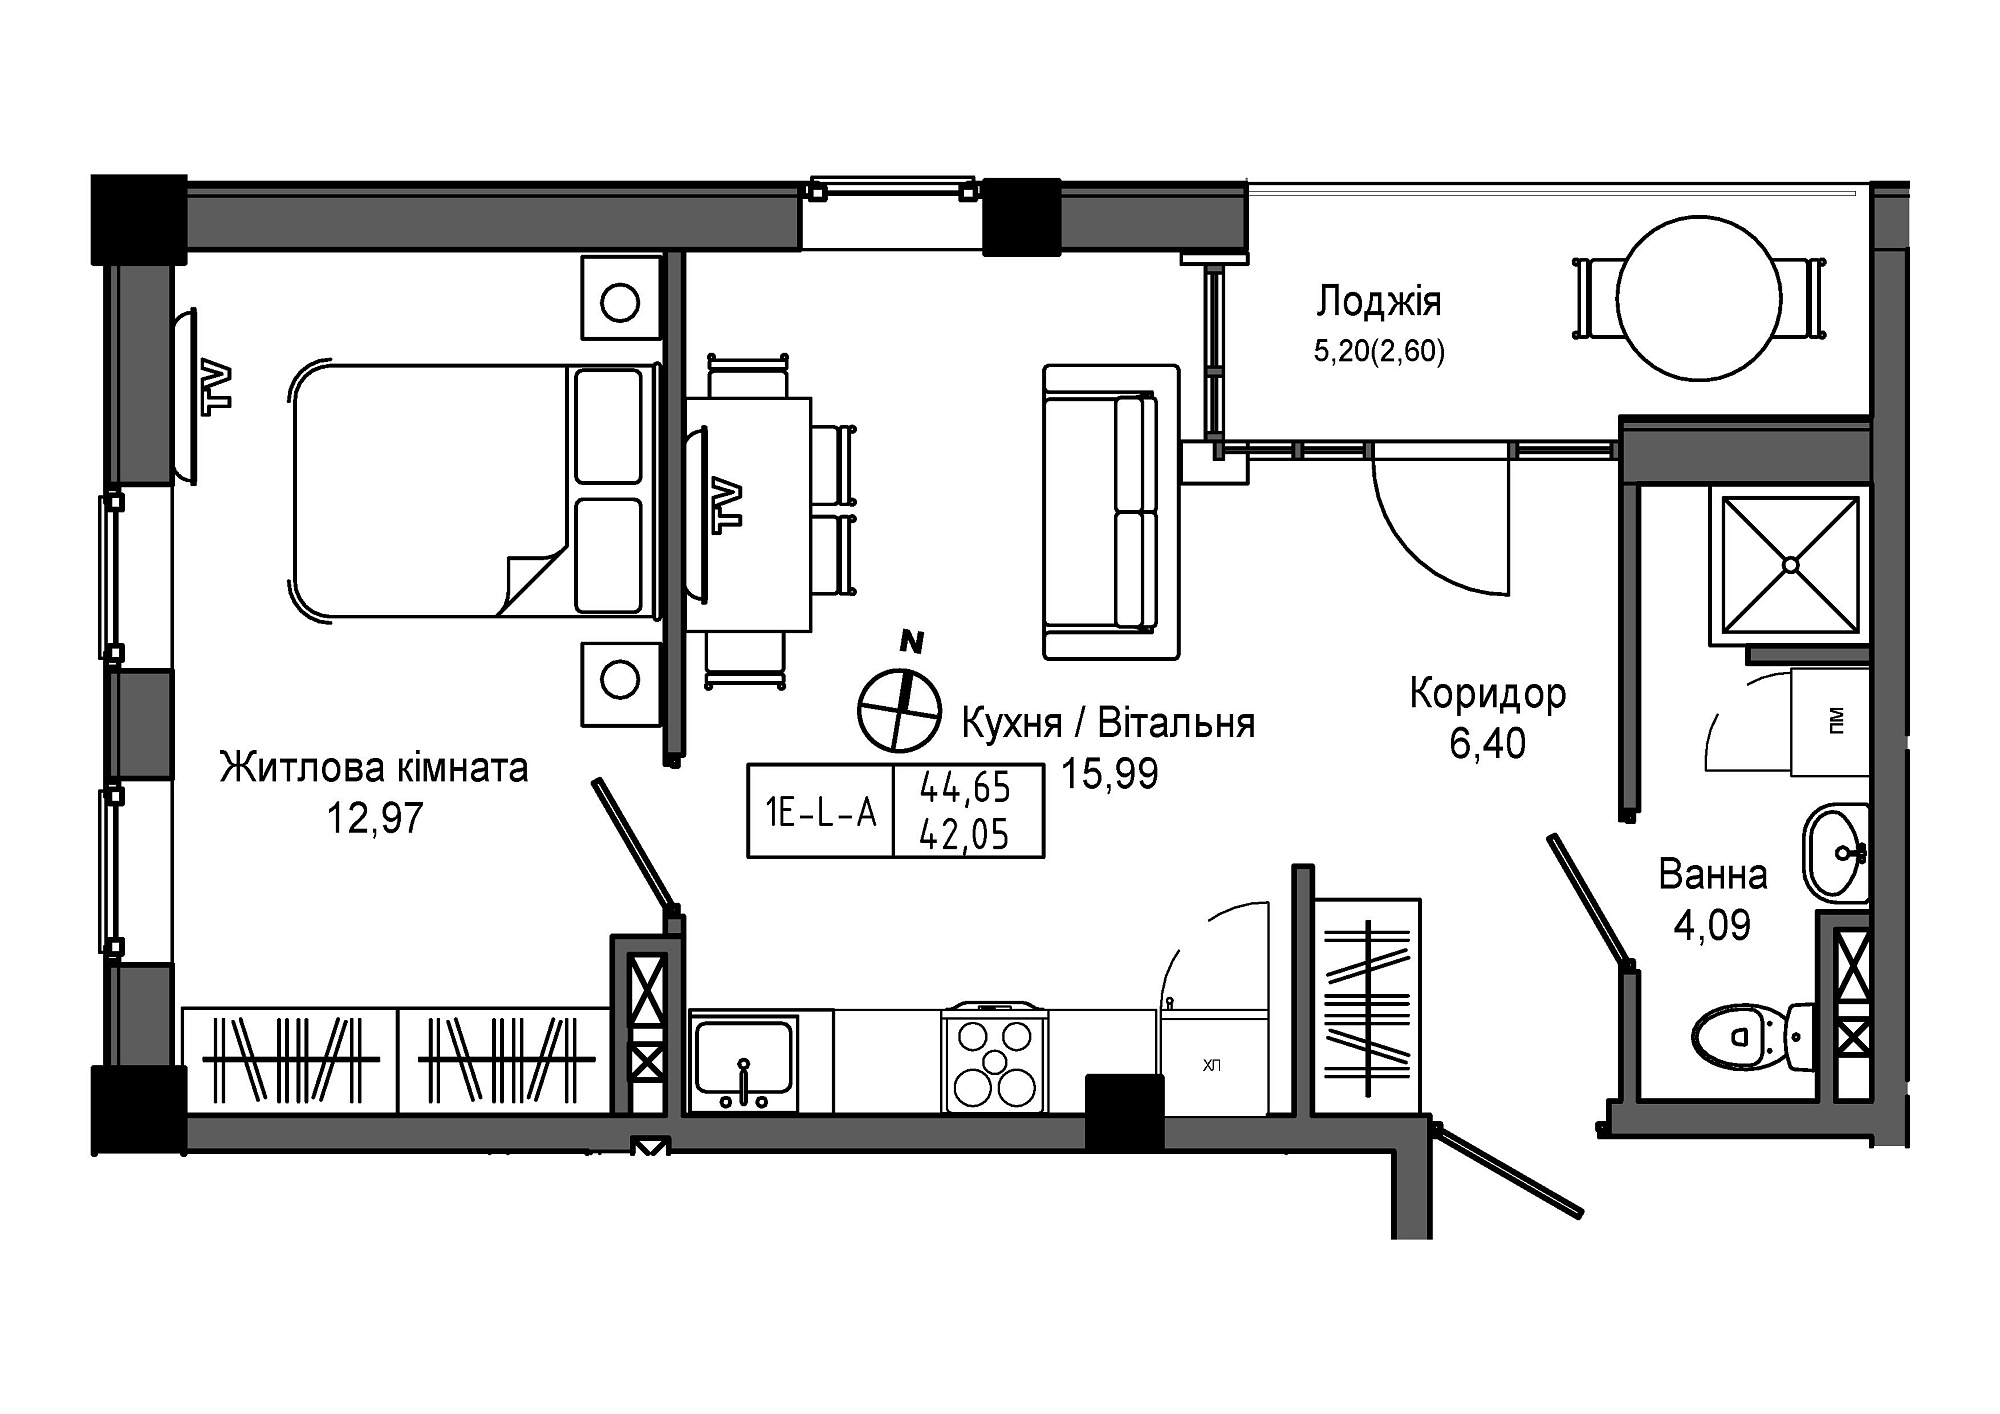 Планування 1-к квартира площею 42.05м2, UM-006-09/0018.